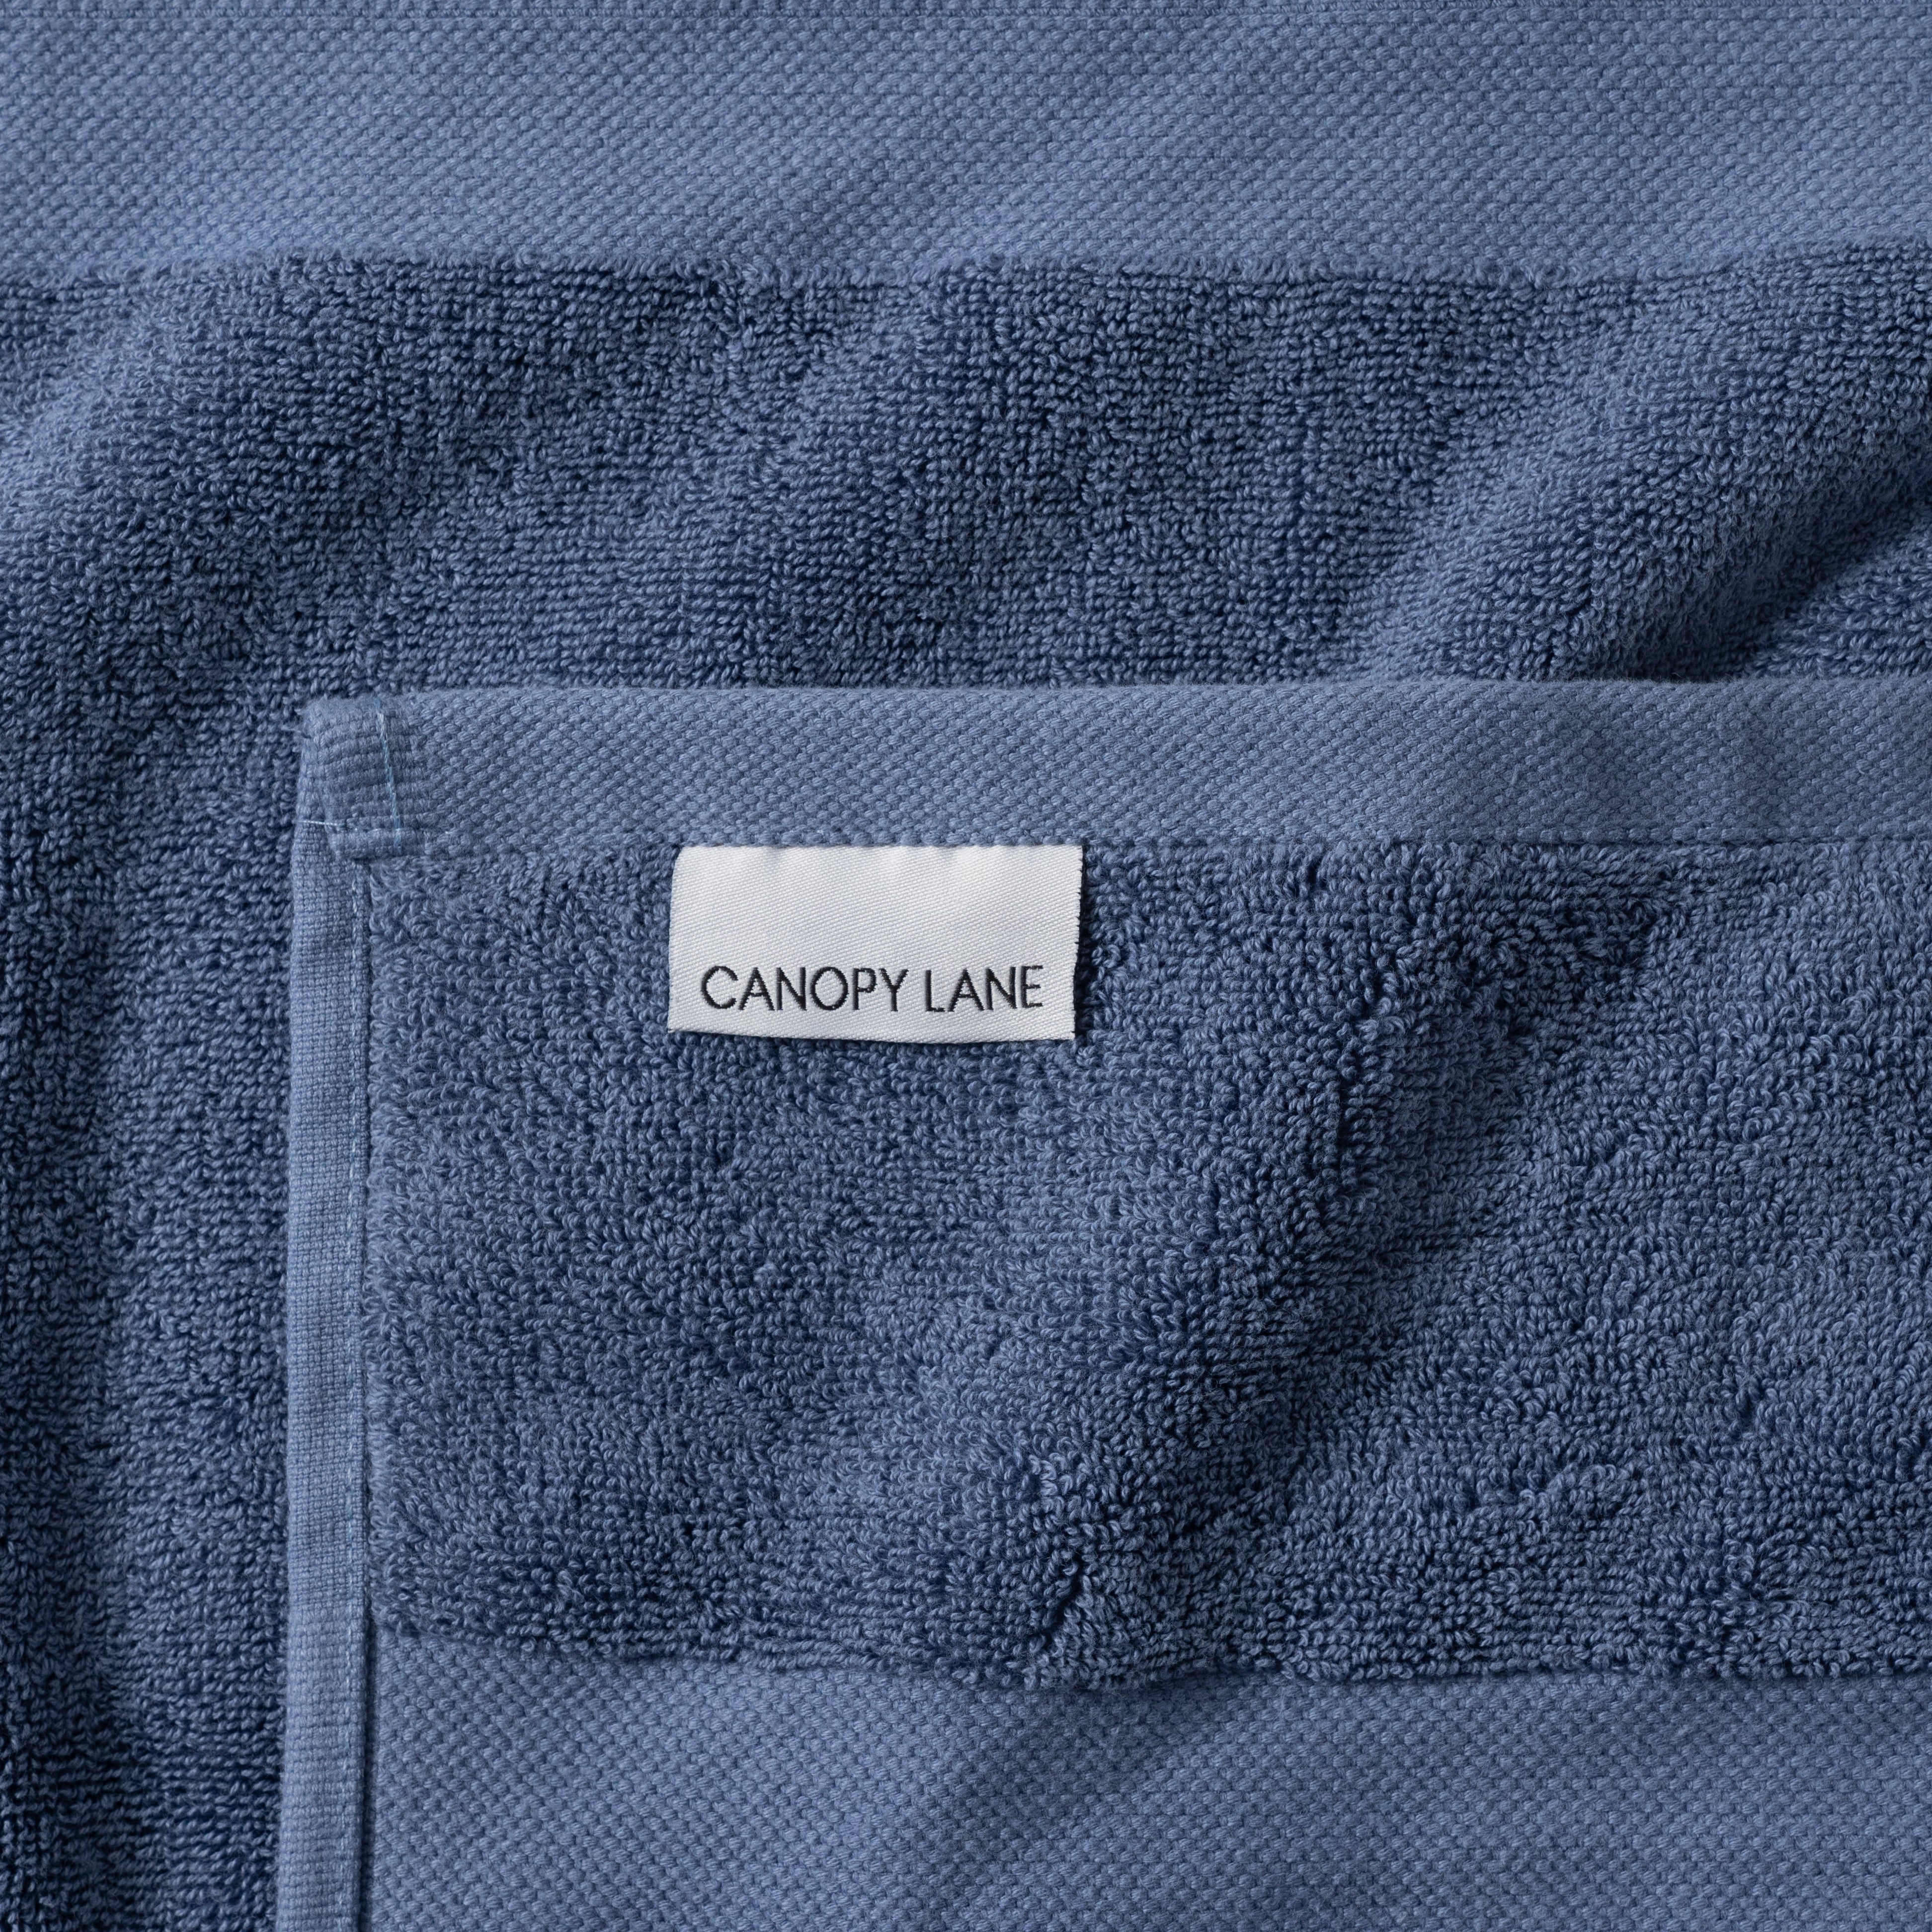 Under The Canopy Classic Organic Towel - Deep Teal Deep Teal / Wash Cloth